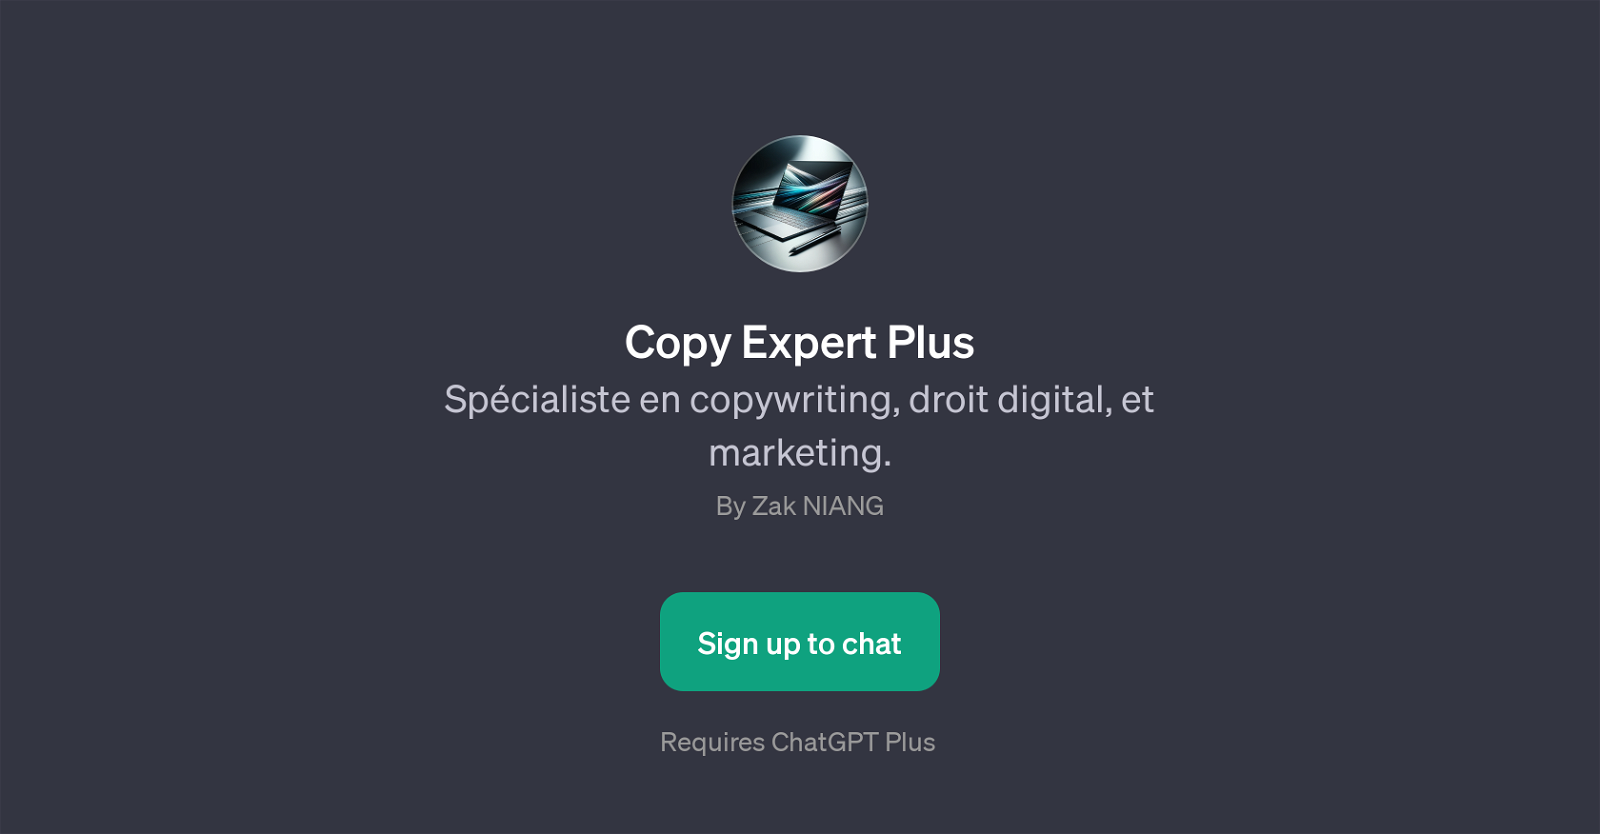 Copy Expert Plus website